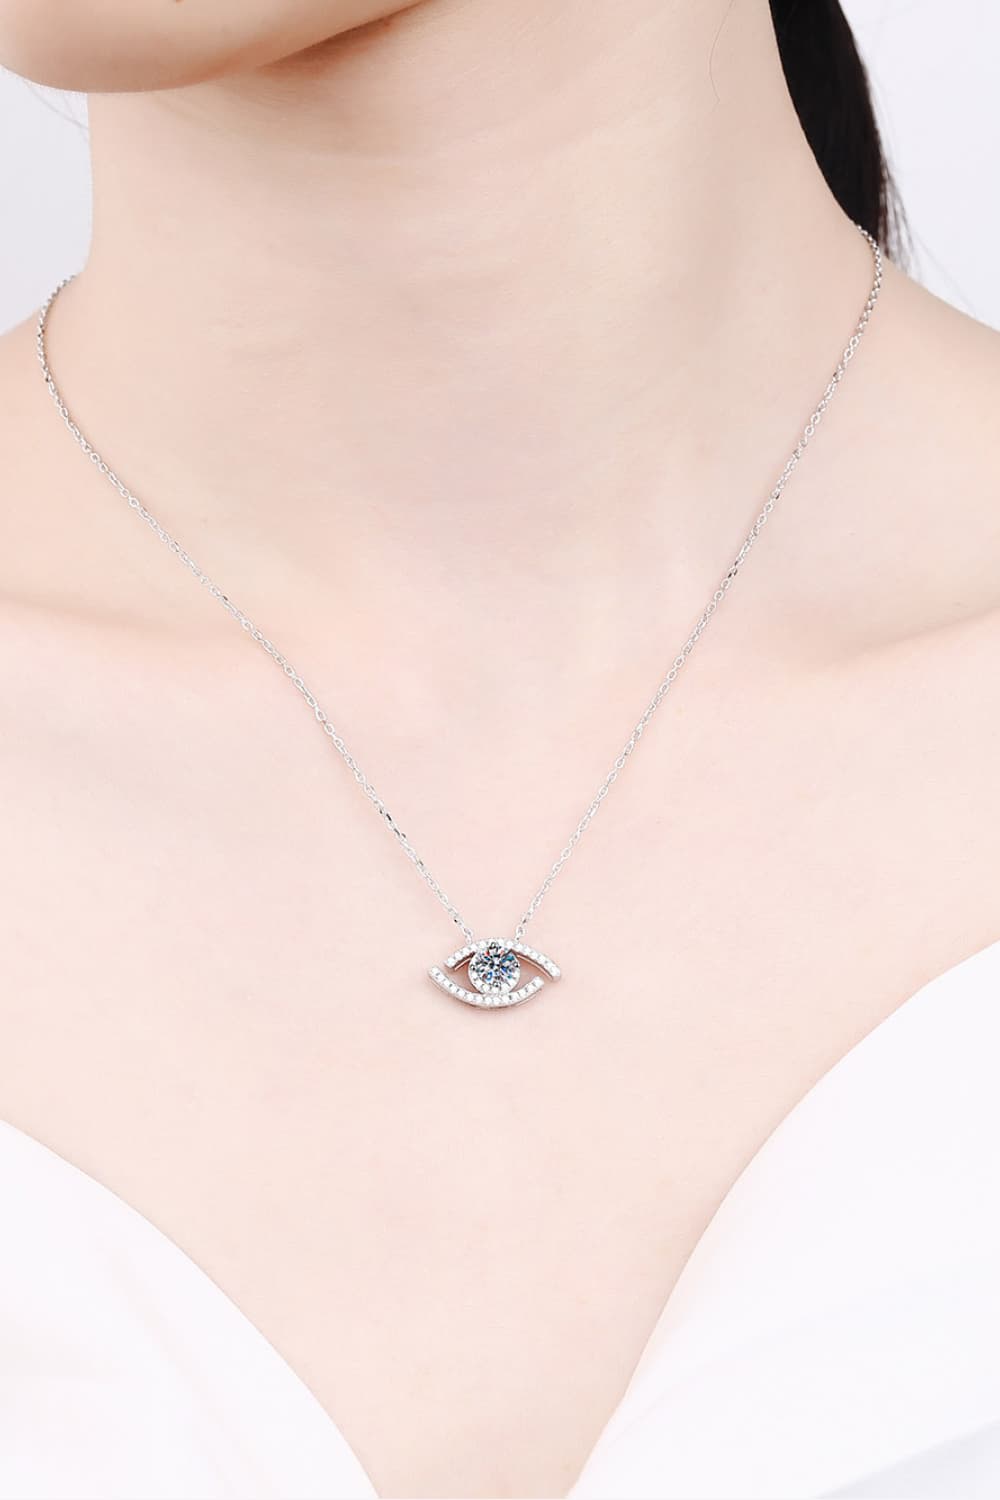 Antique White Moissanite Evil Eye Pendant 925 Sterling Silver Necklace